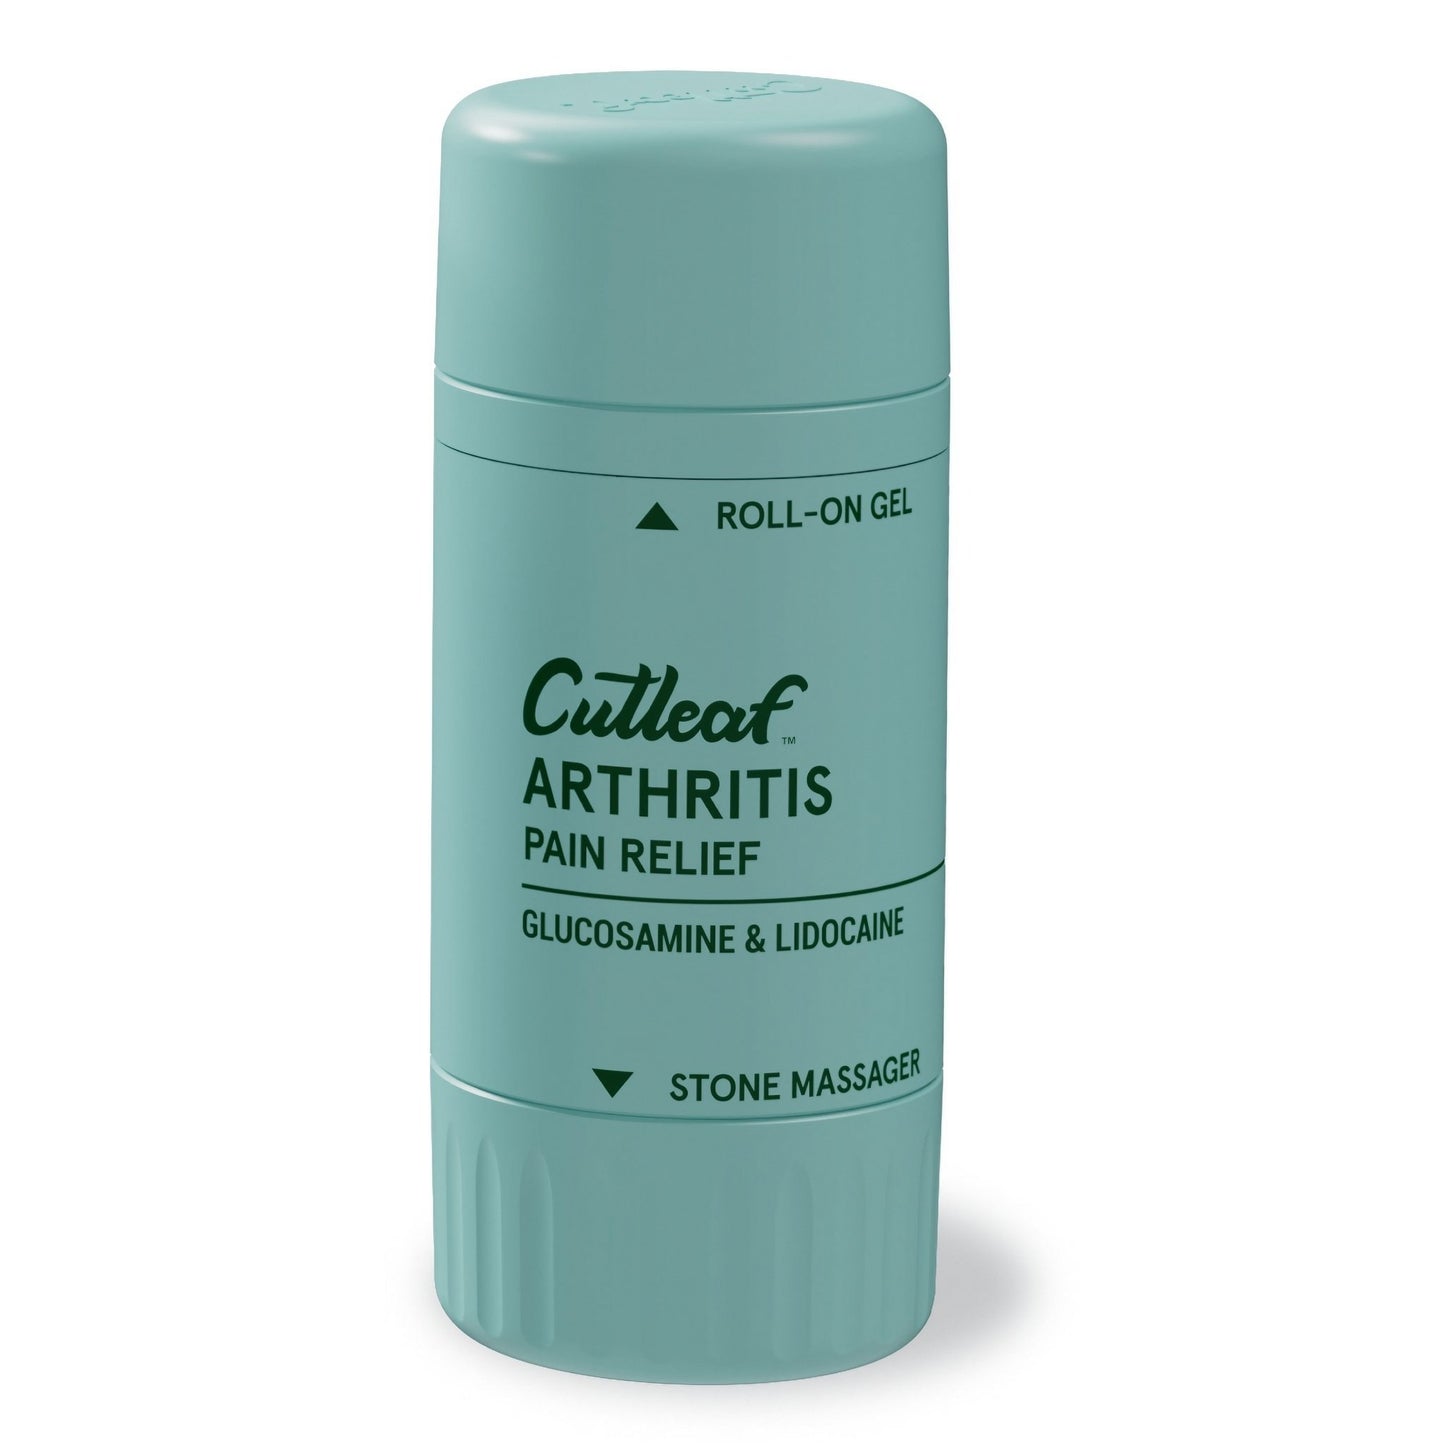 Cutleaf Arthritis relief roll-on stick